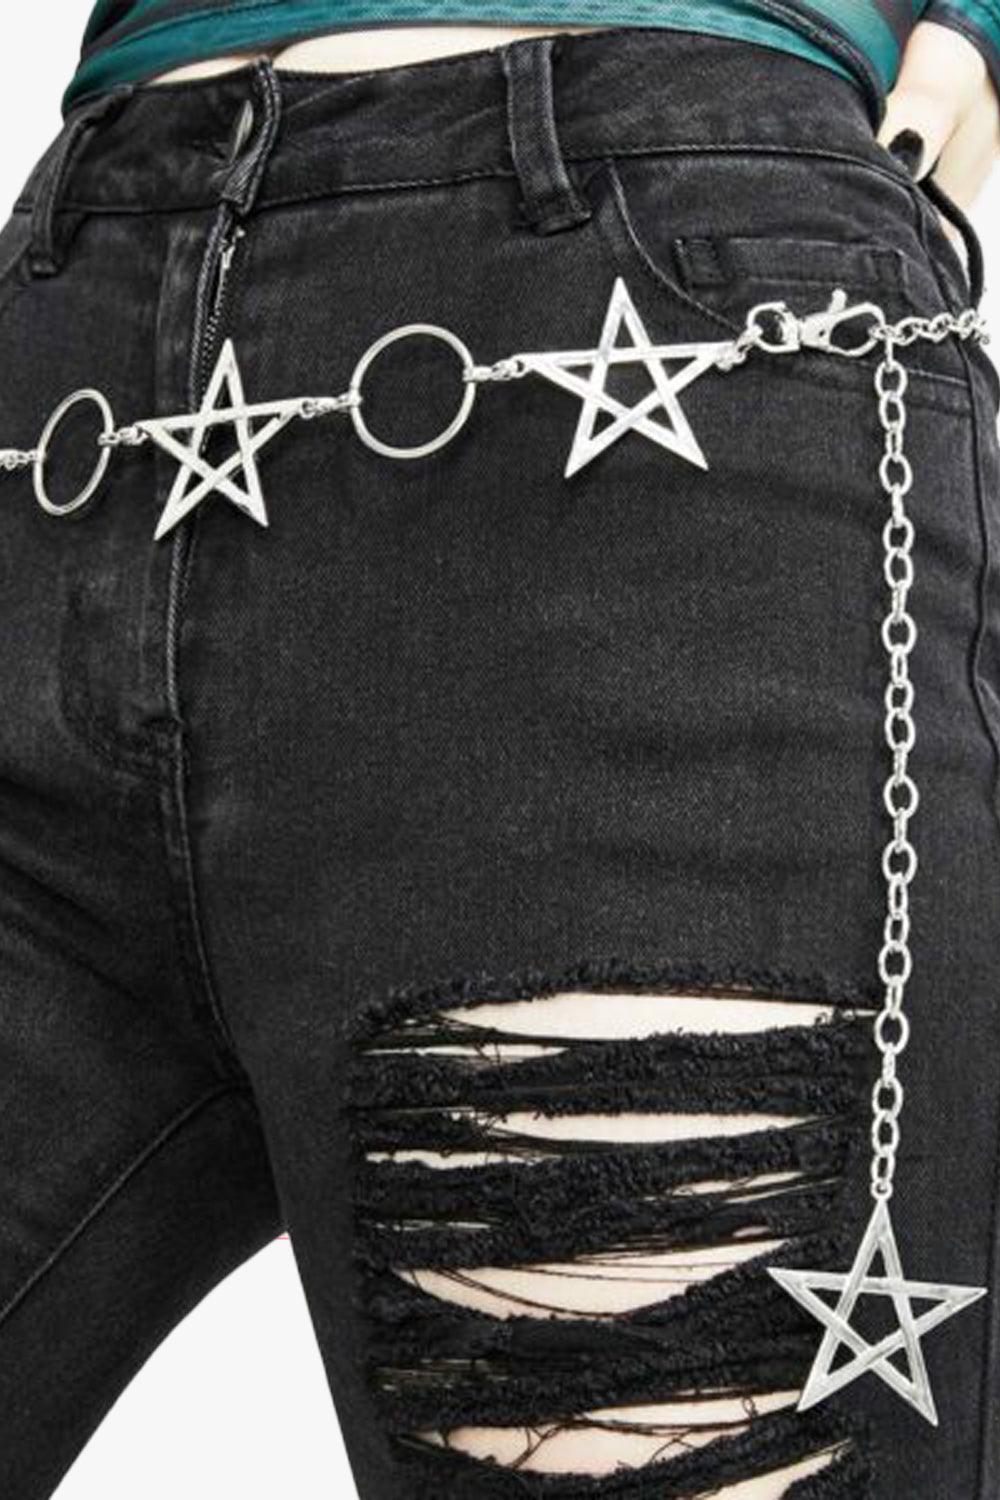 Star rings Wallet chain, Belt chain, Jeans, clip, shapes, denim 90's  Trouser, Industrial, Alternative, Grunge, Goth, Punk, Rock, Grungy